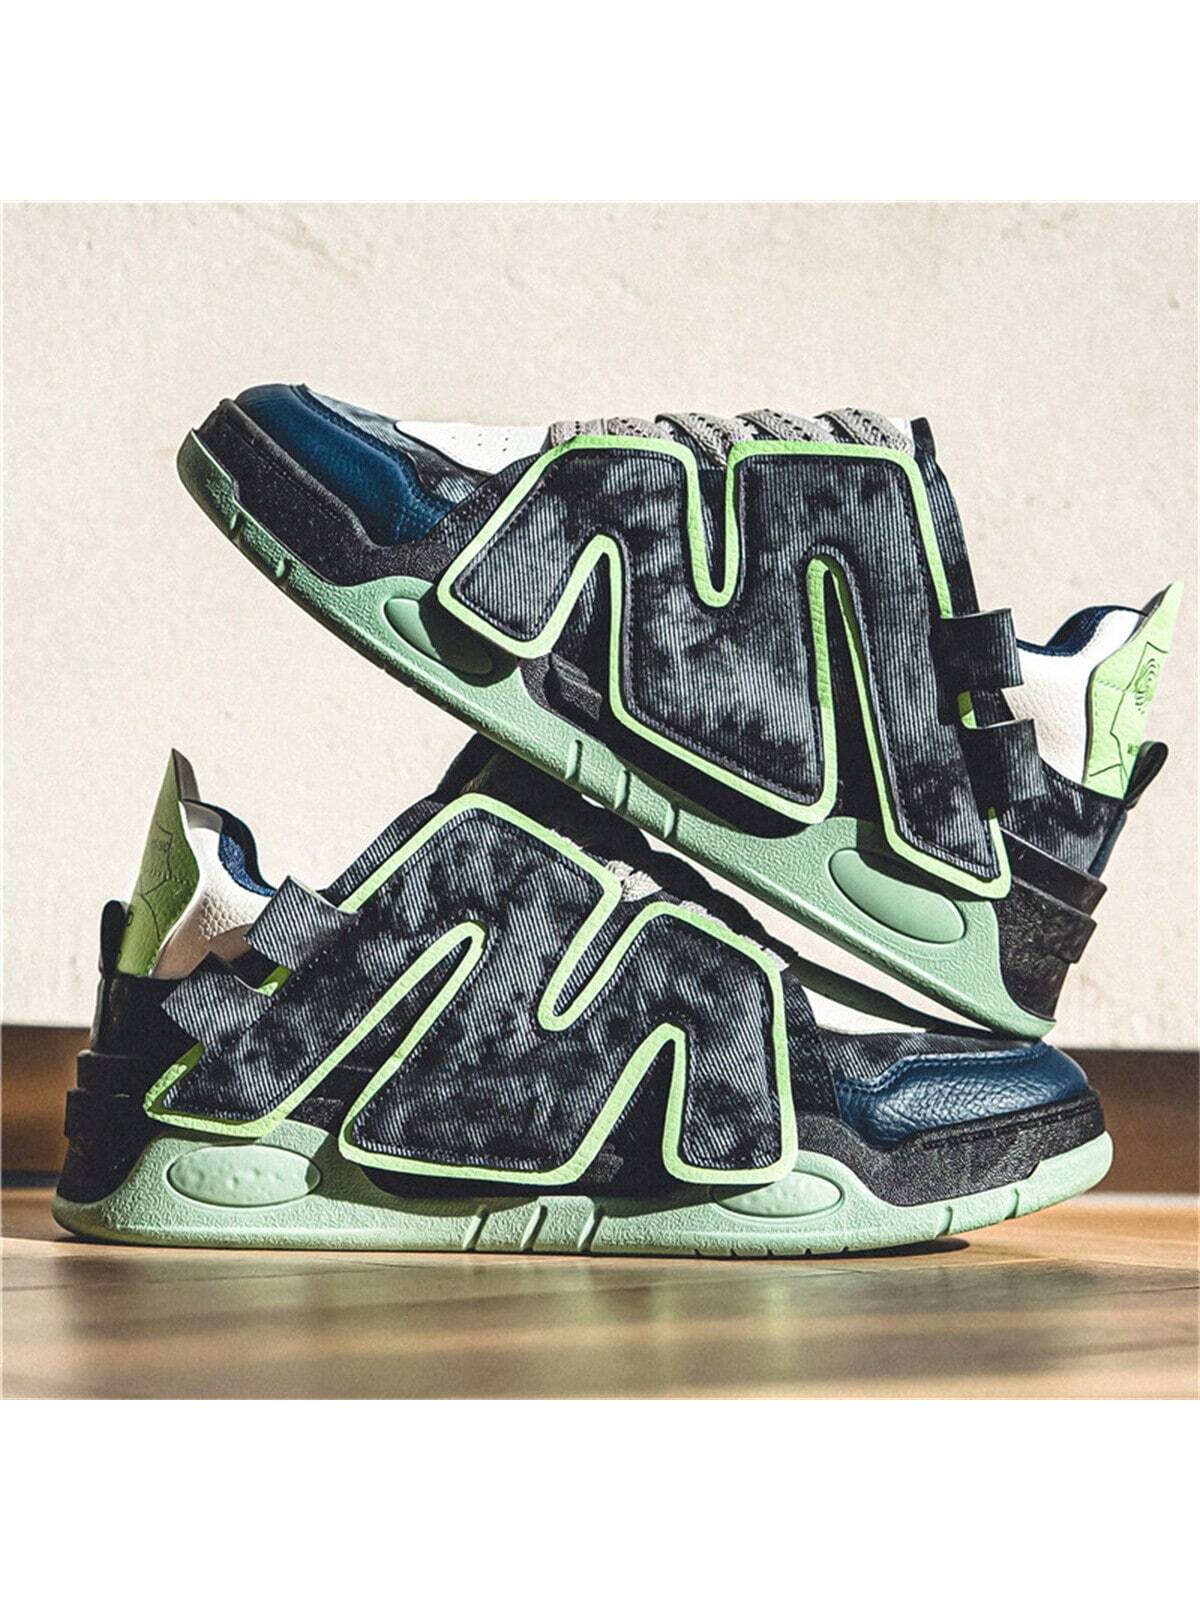 Nextthink Niche Harajuku Versatile Casual Sneakers - NextthinkShopsx2307177273261219